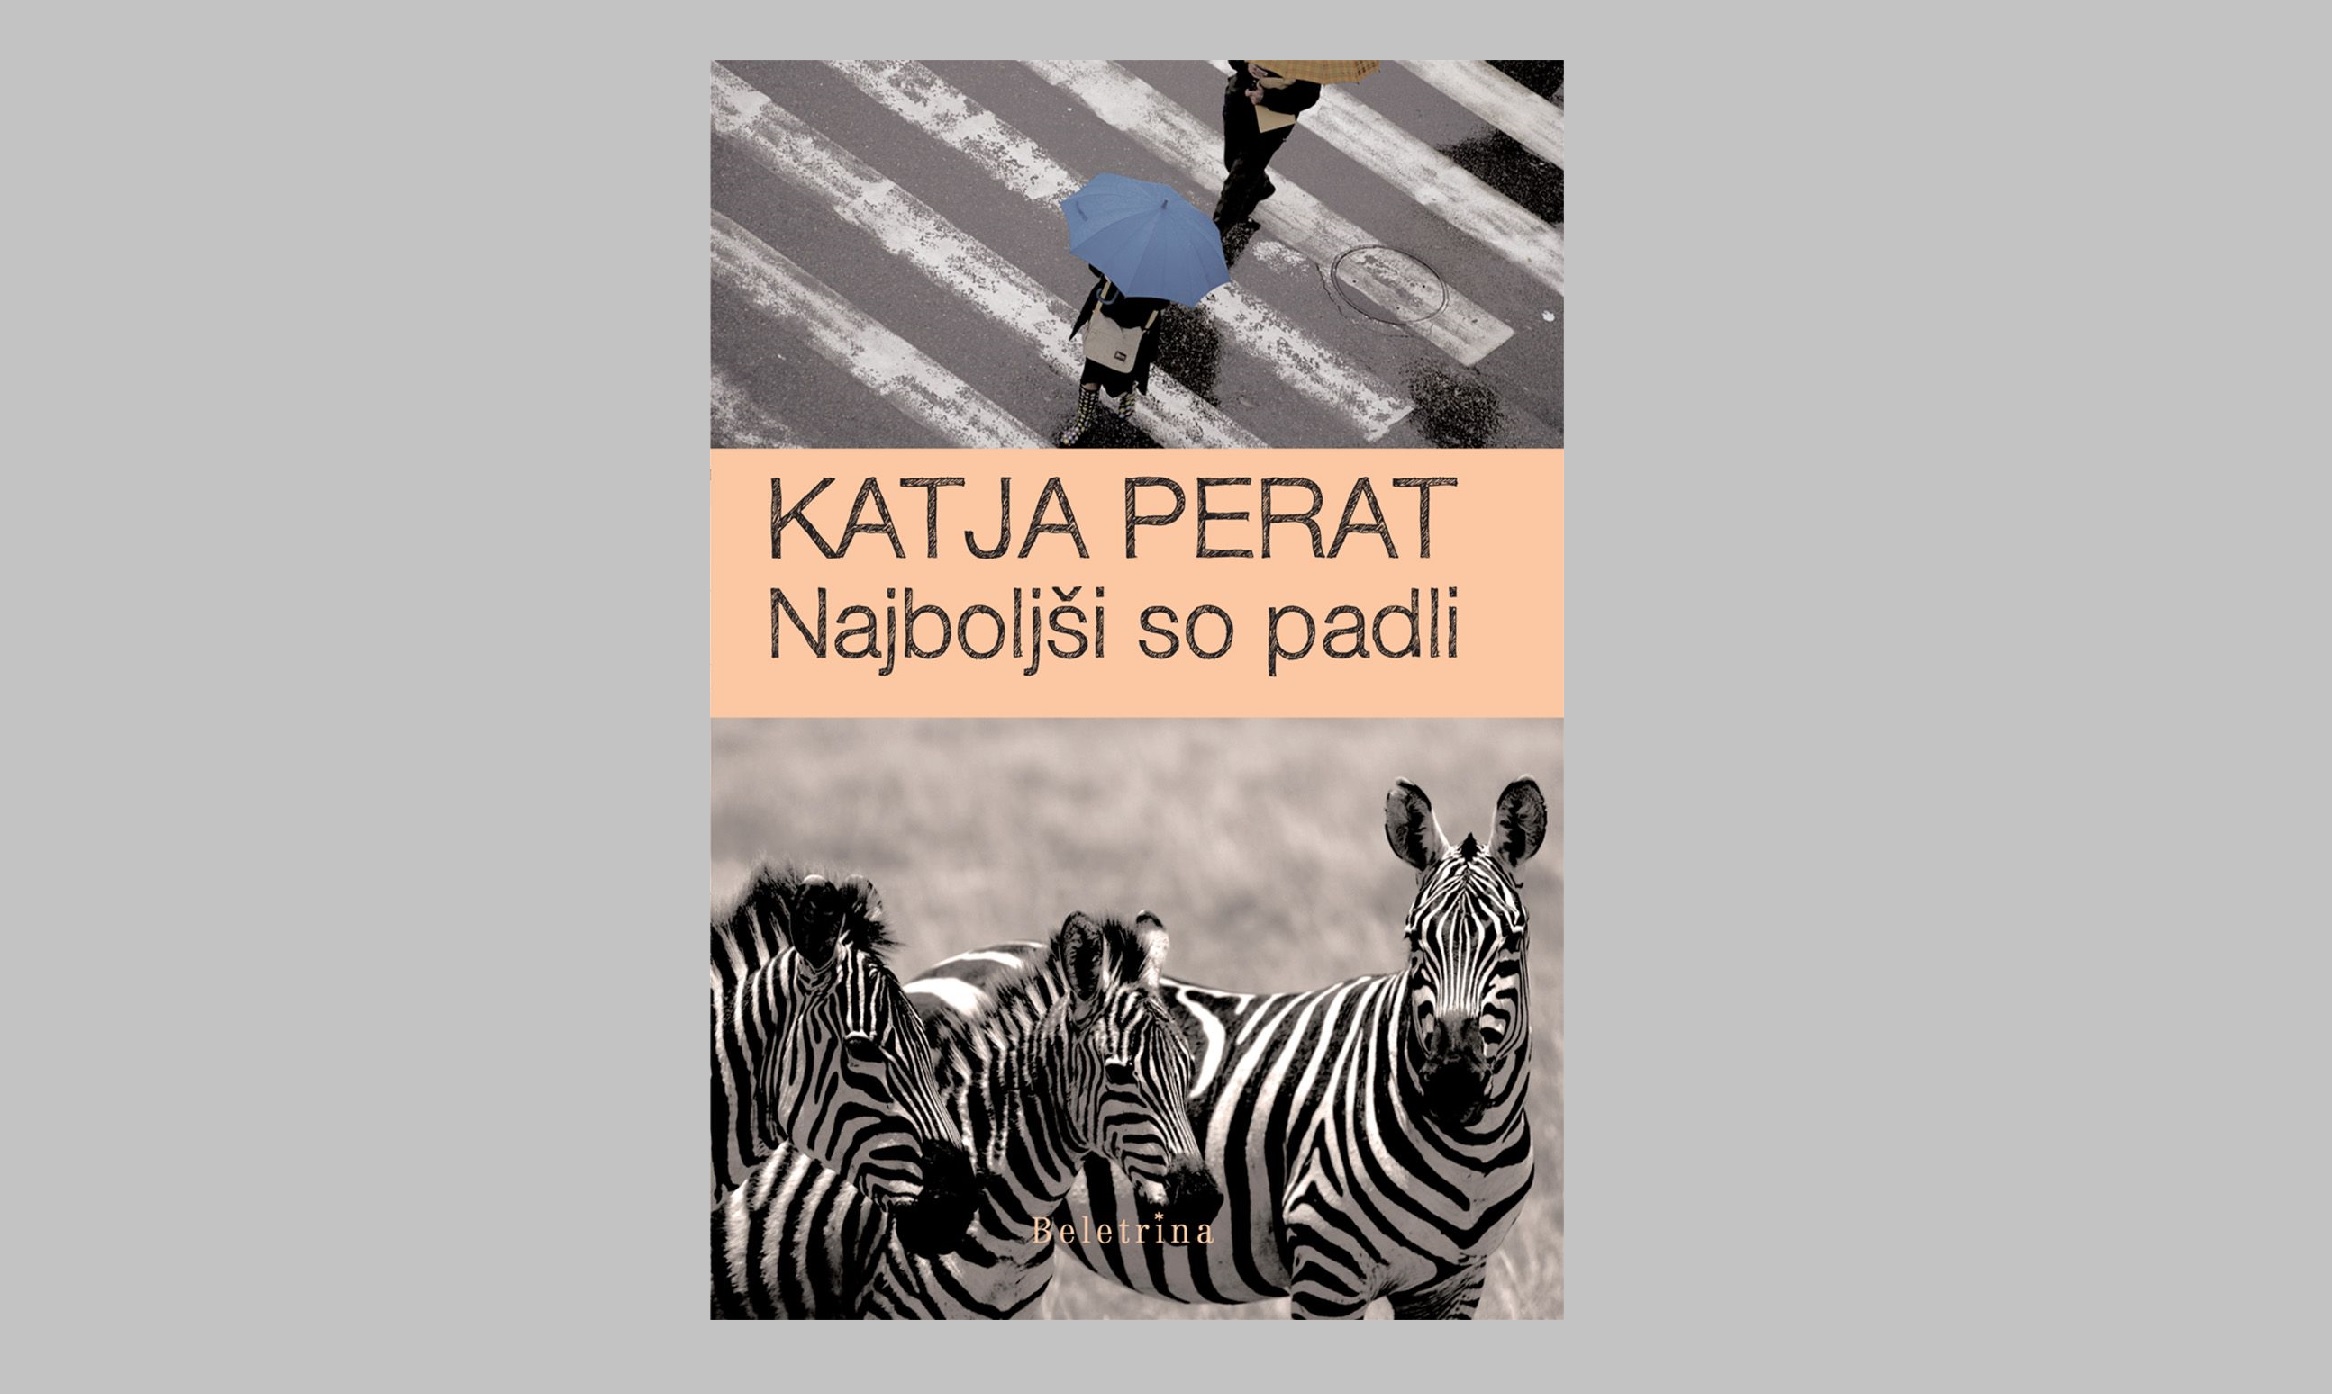 ‘Fear of Language’ – a Katja Perat poem translated